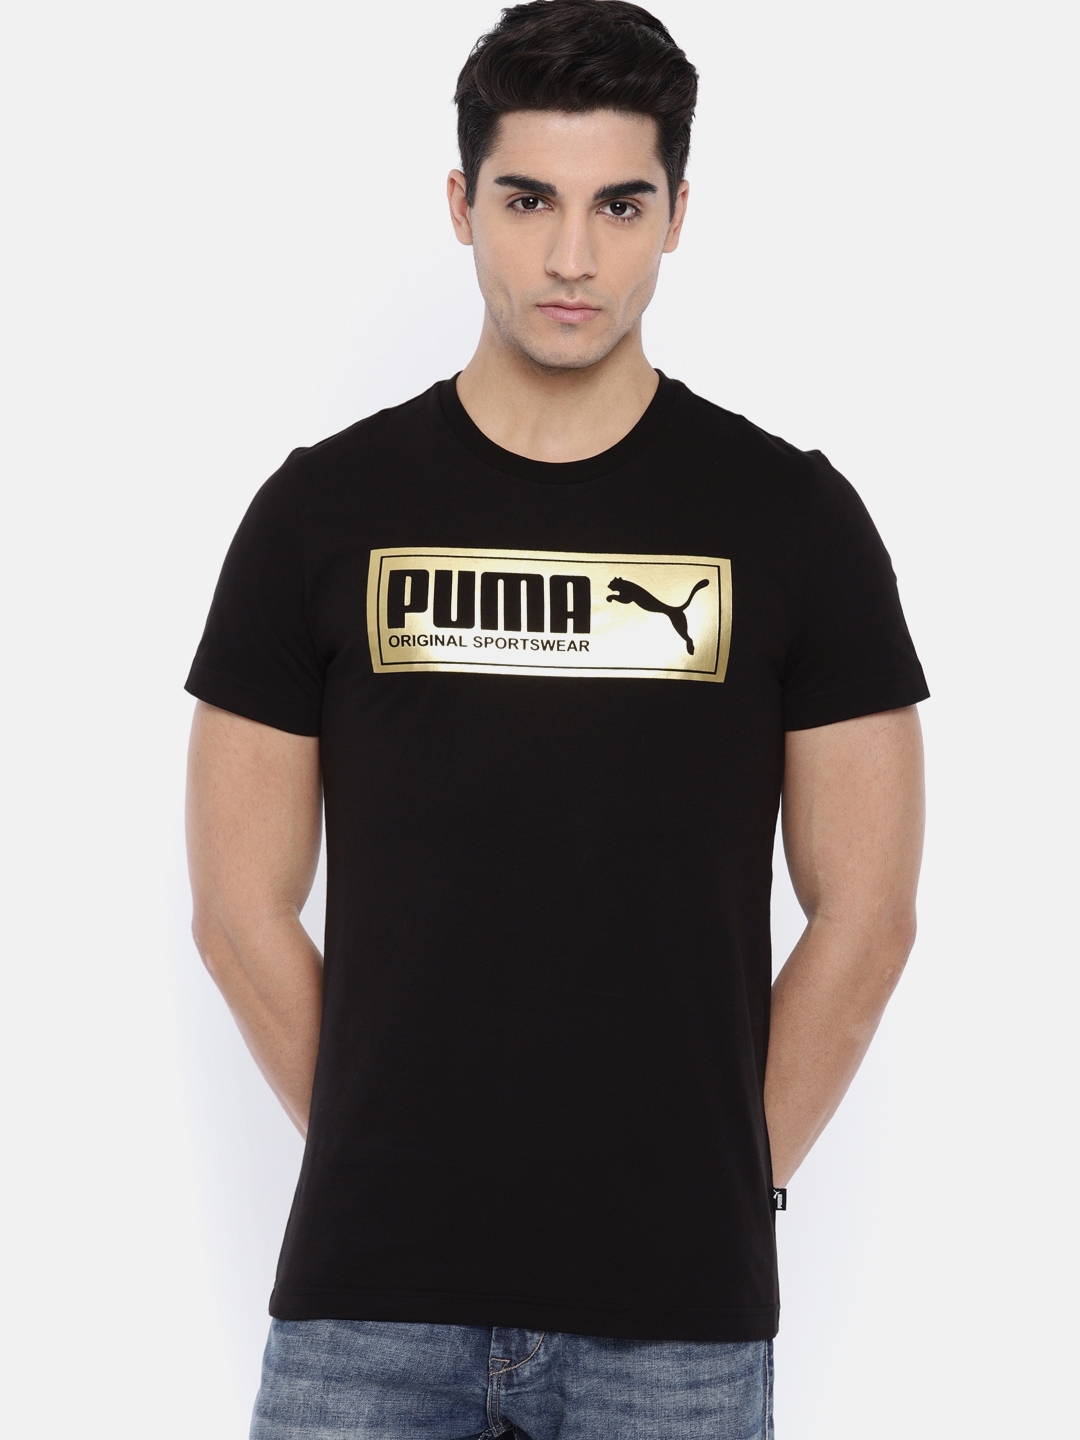 alcohol lost heart why black and gold puma shirt Off 56% - sirinscrochet.com